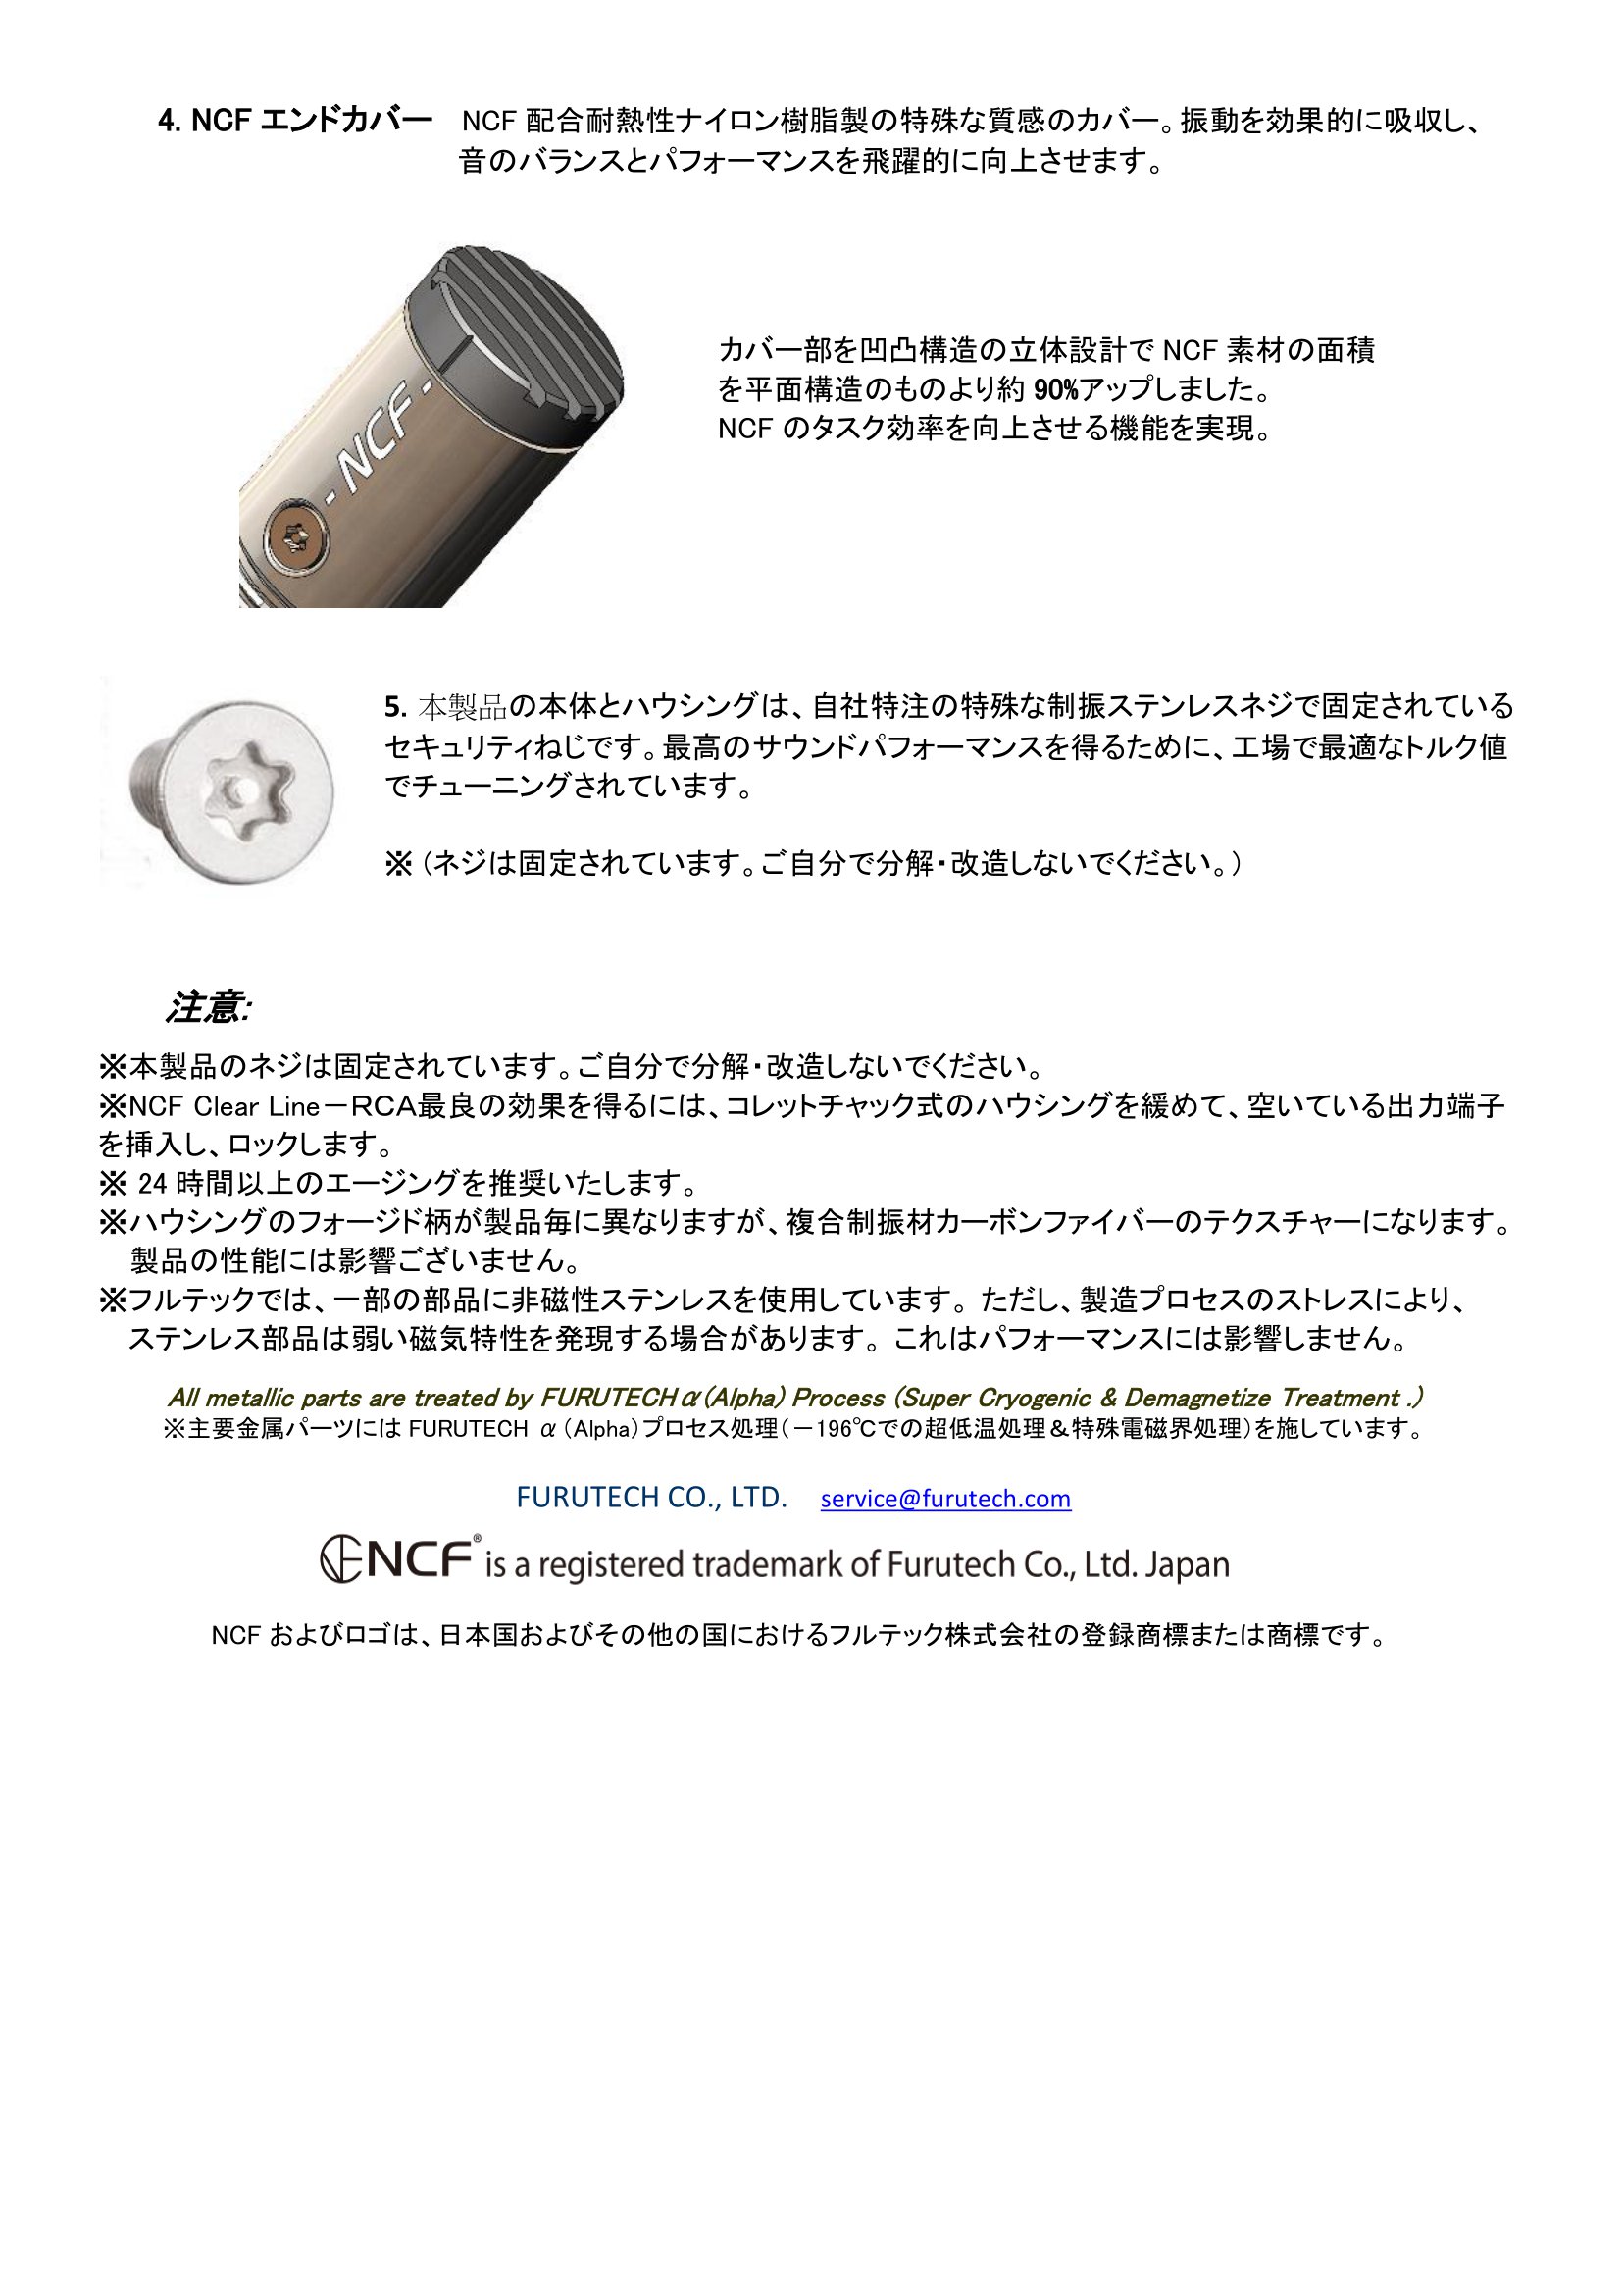 NCF Clear Line-RCA(News)-JP-4